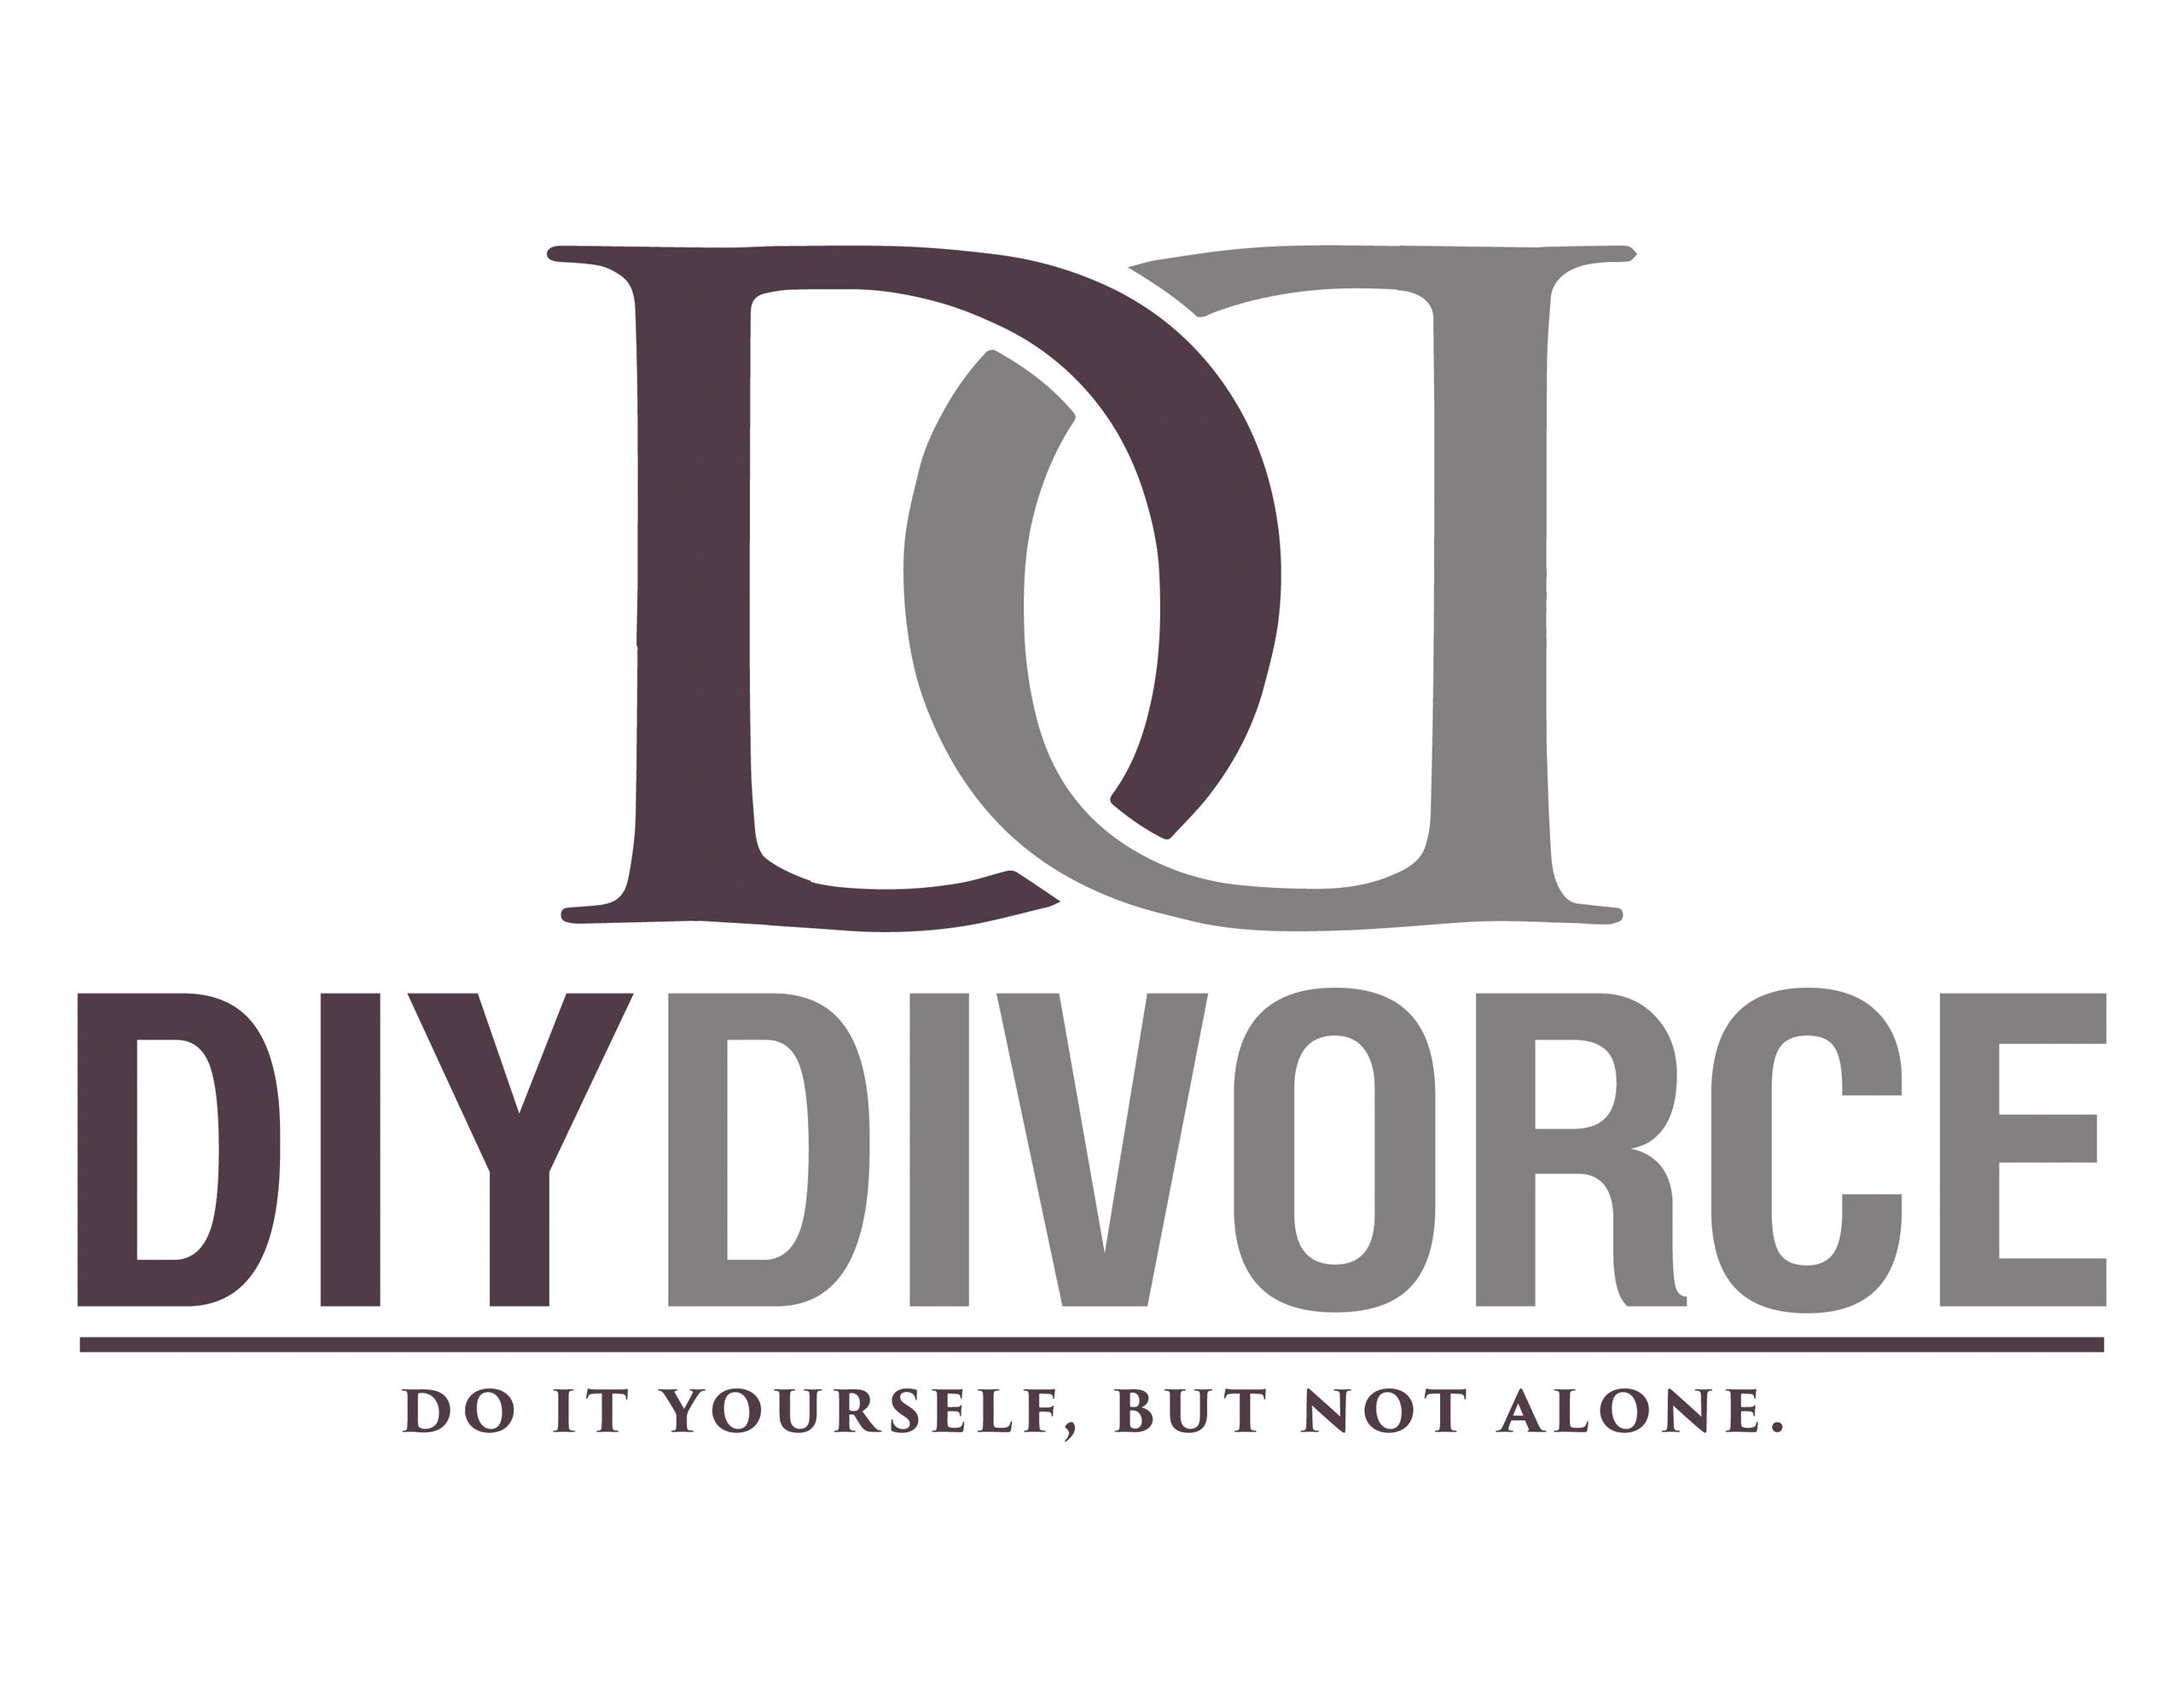 Best Way To Divorce DIY Infographic - Best Way To Divorce Advice, Co-Parenting & Co-Habitation